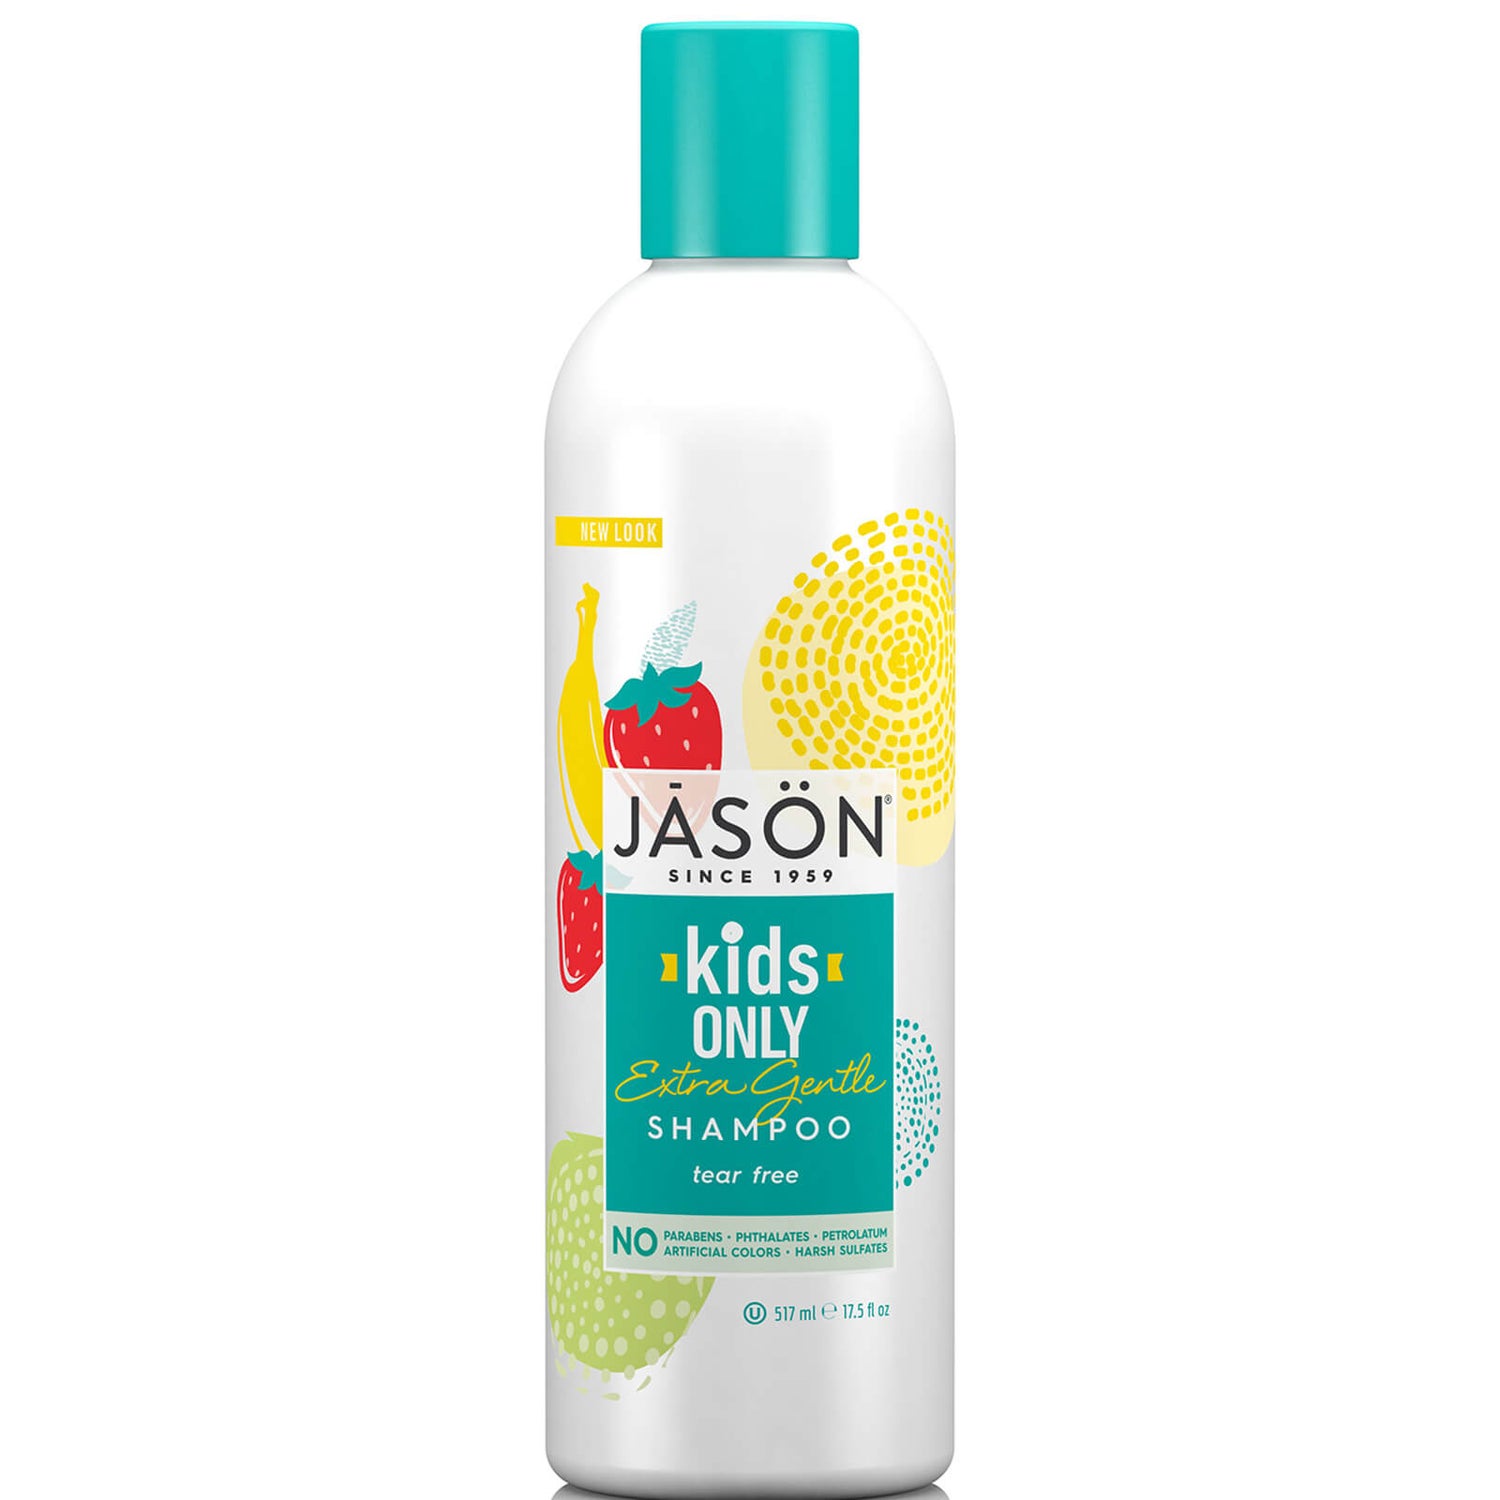 Jason Kids Only! Extra Gentle Shampoo (517ml)